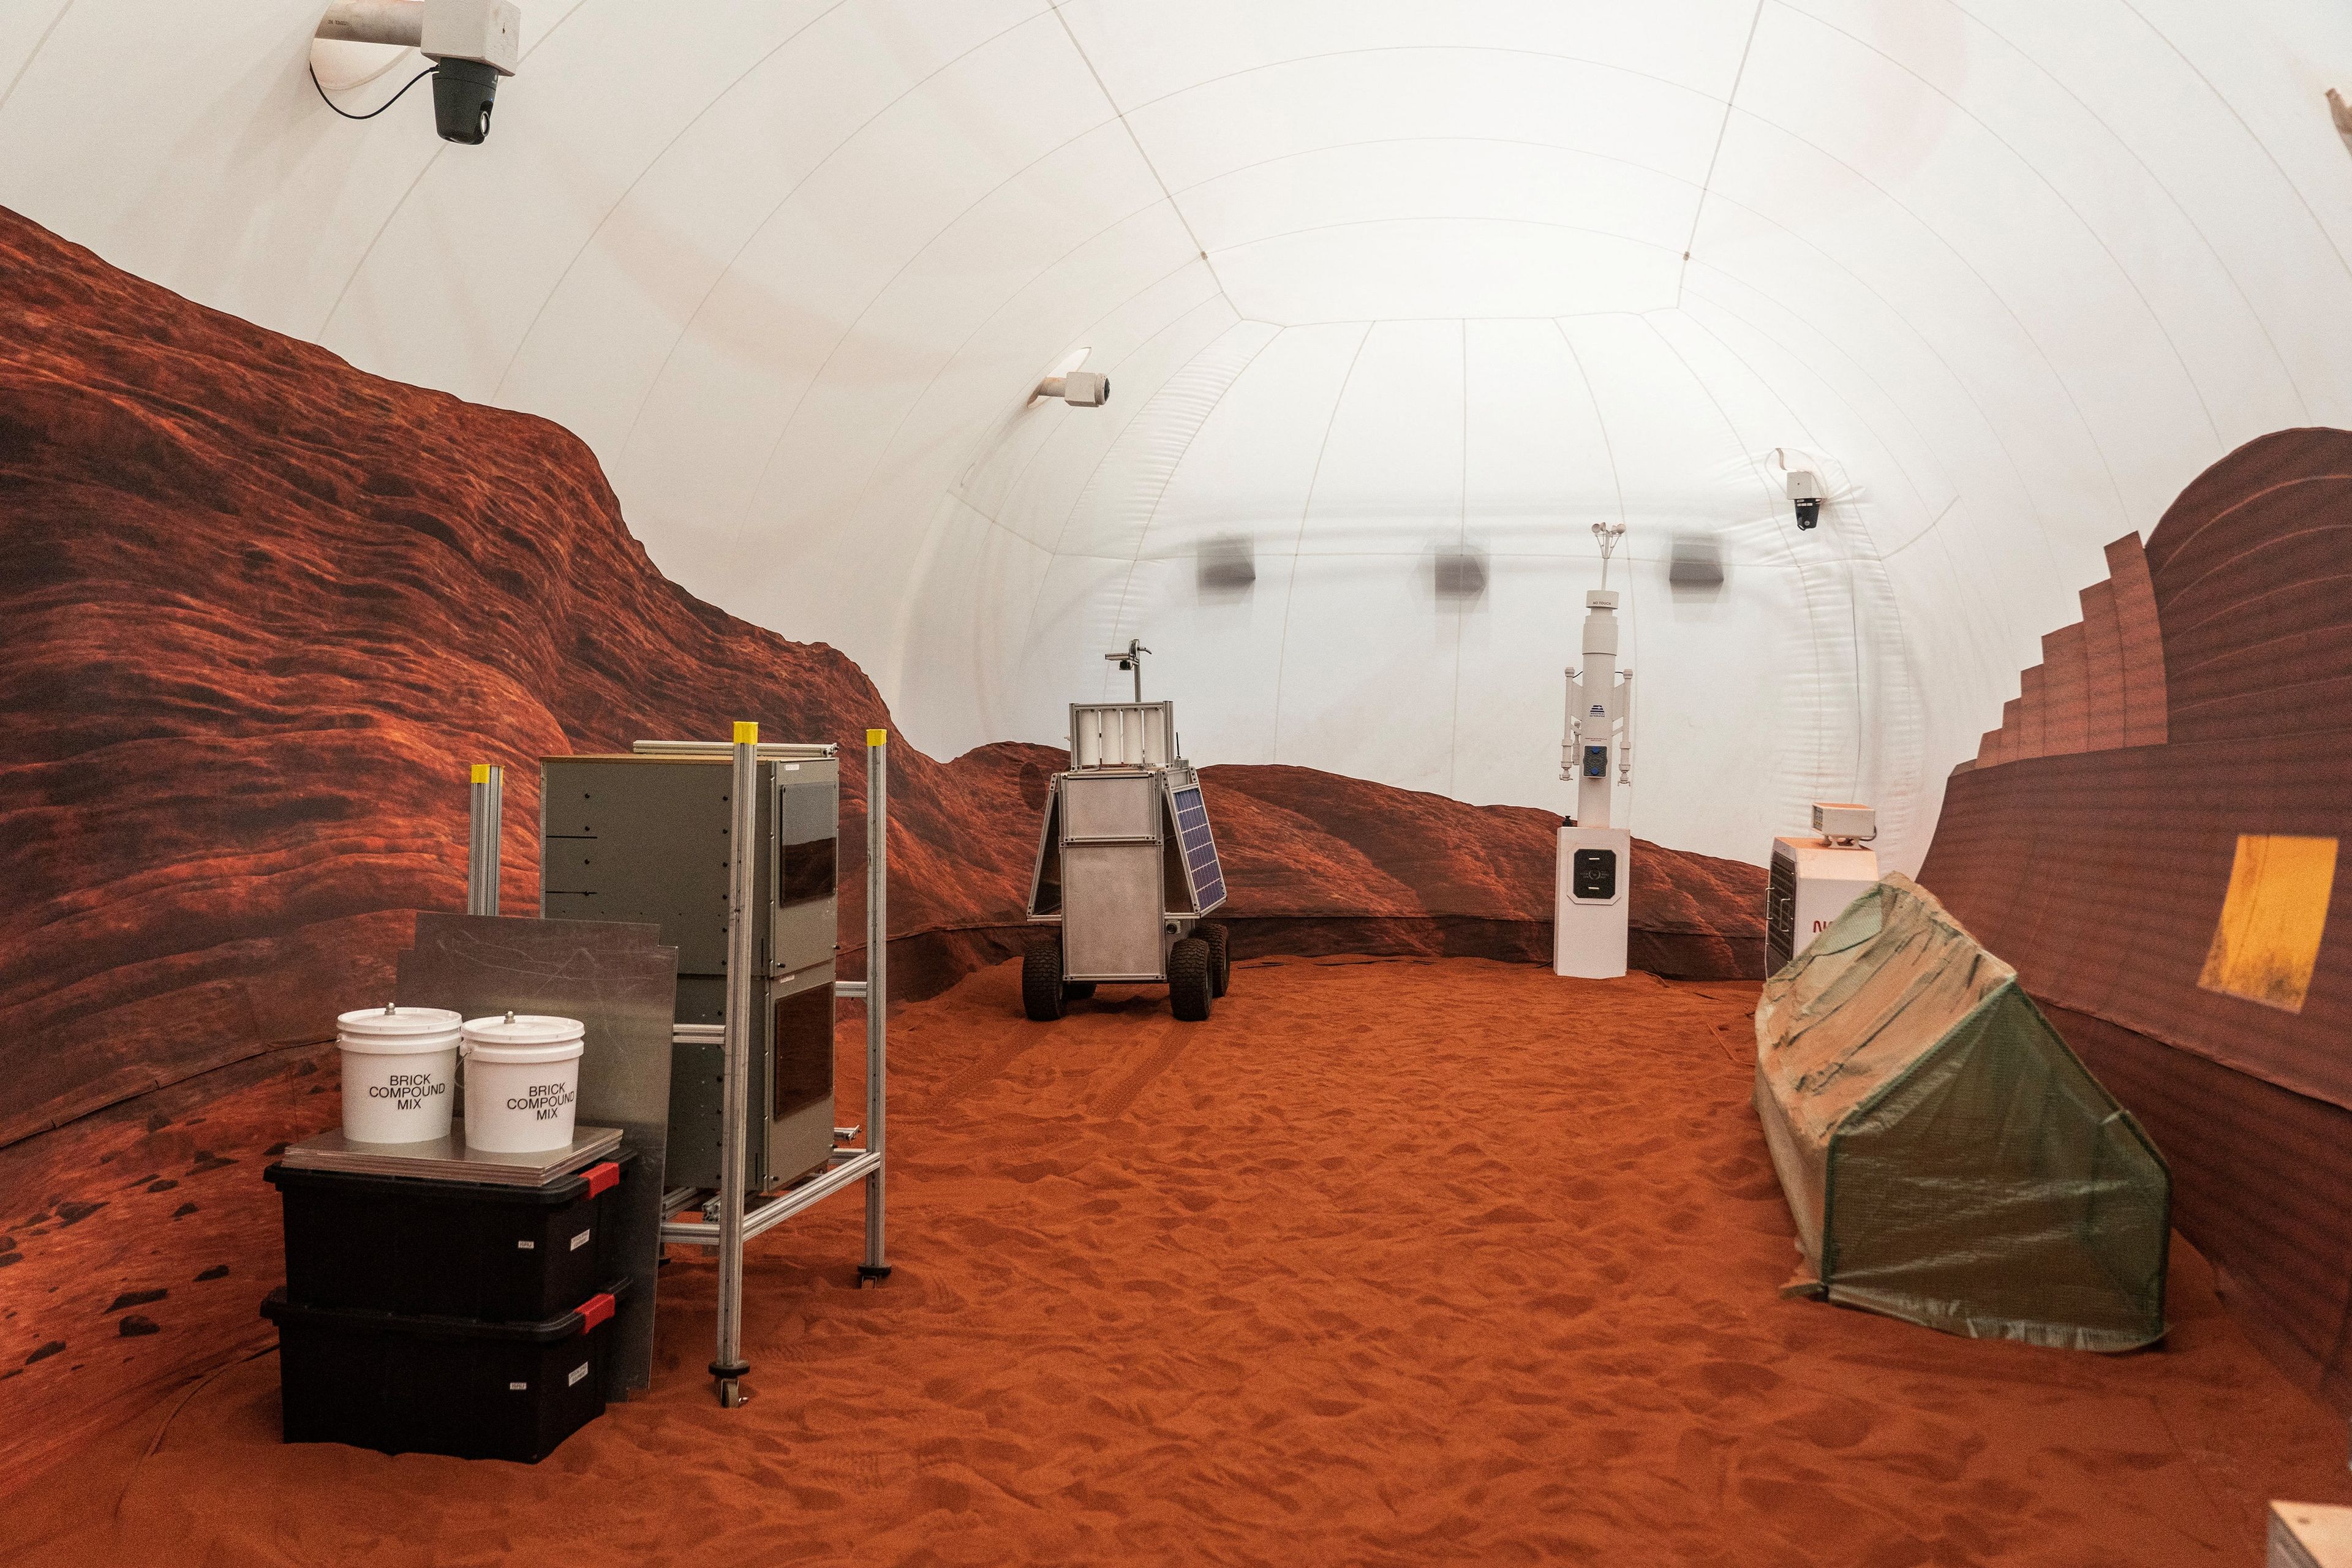 Mars Dune Alpha NASA hábitat marciano impreso en 3D en la Tierra